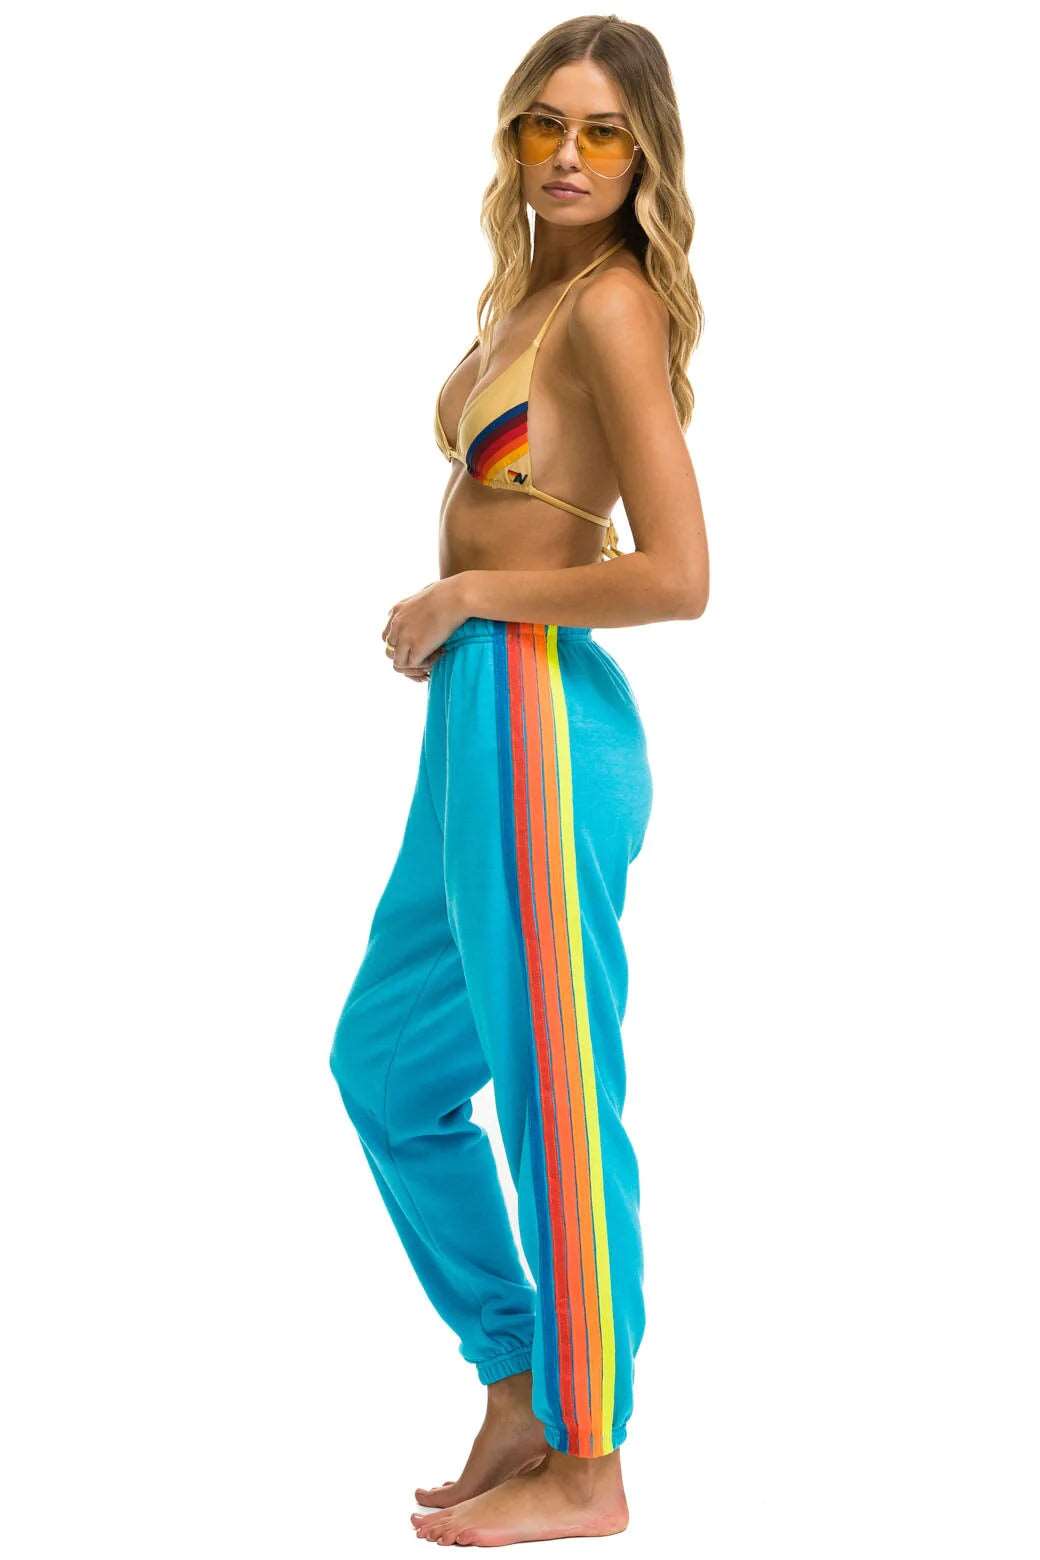 Aviator Nation 5 Stripe Women's Sweatpants Neon Blue/Neon Rainbow